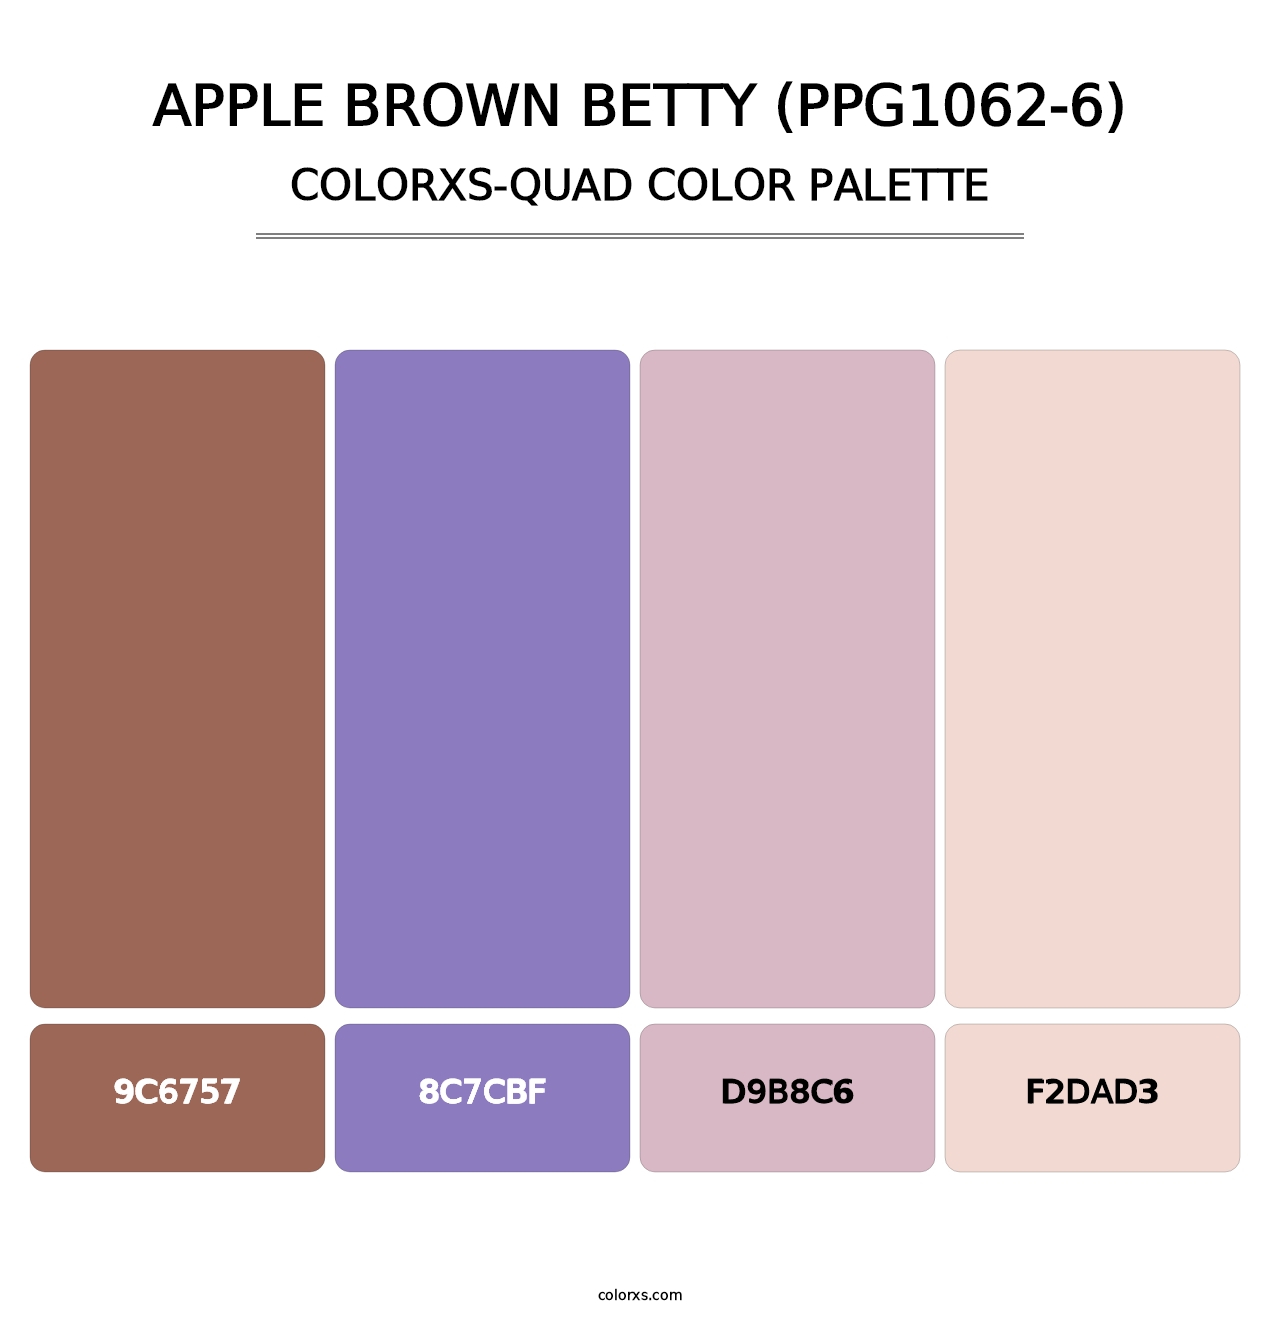 Apple Brown Betty (PPG1062-6) - Colorxs Quad Palette